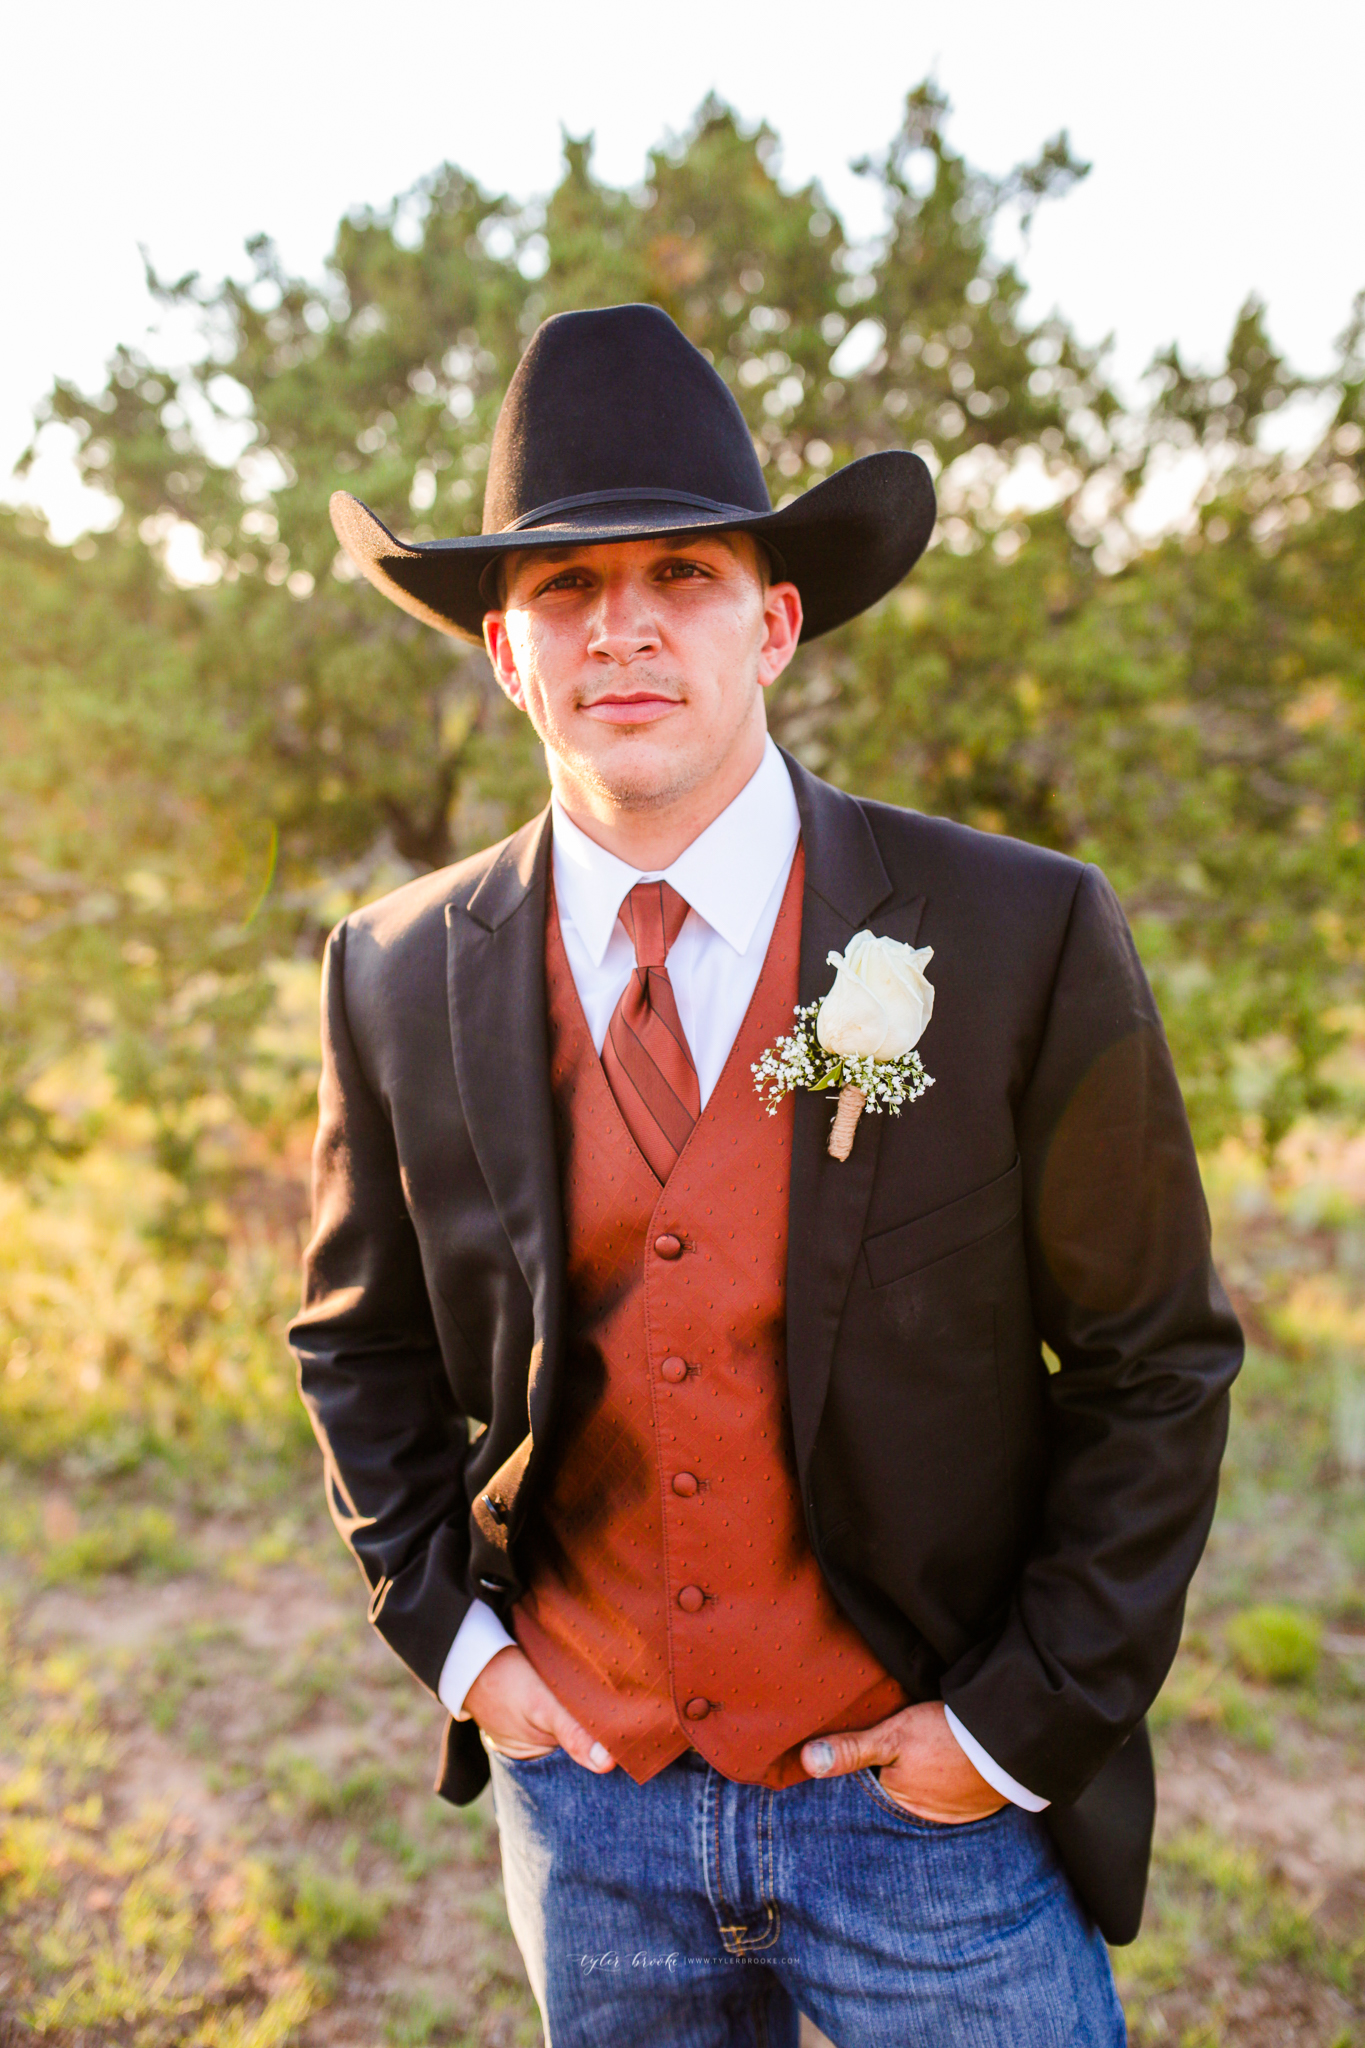 Edgewood New Mexico_Country Wedding Photographer_www.tylerbrooke.com_Kate Kauffman (31 of 35)